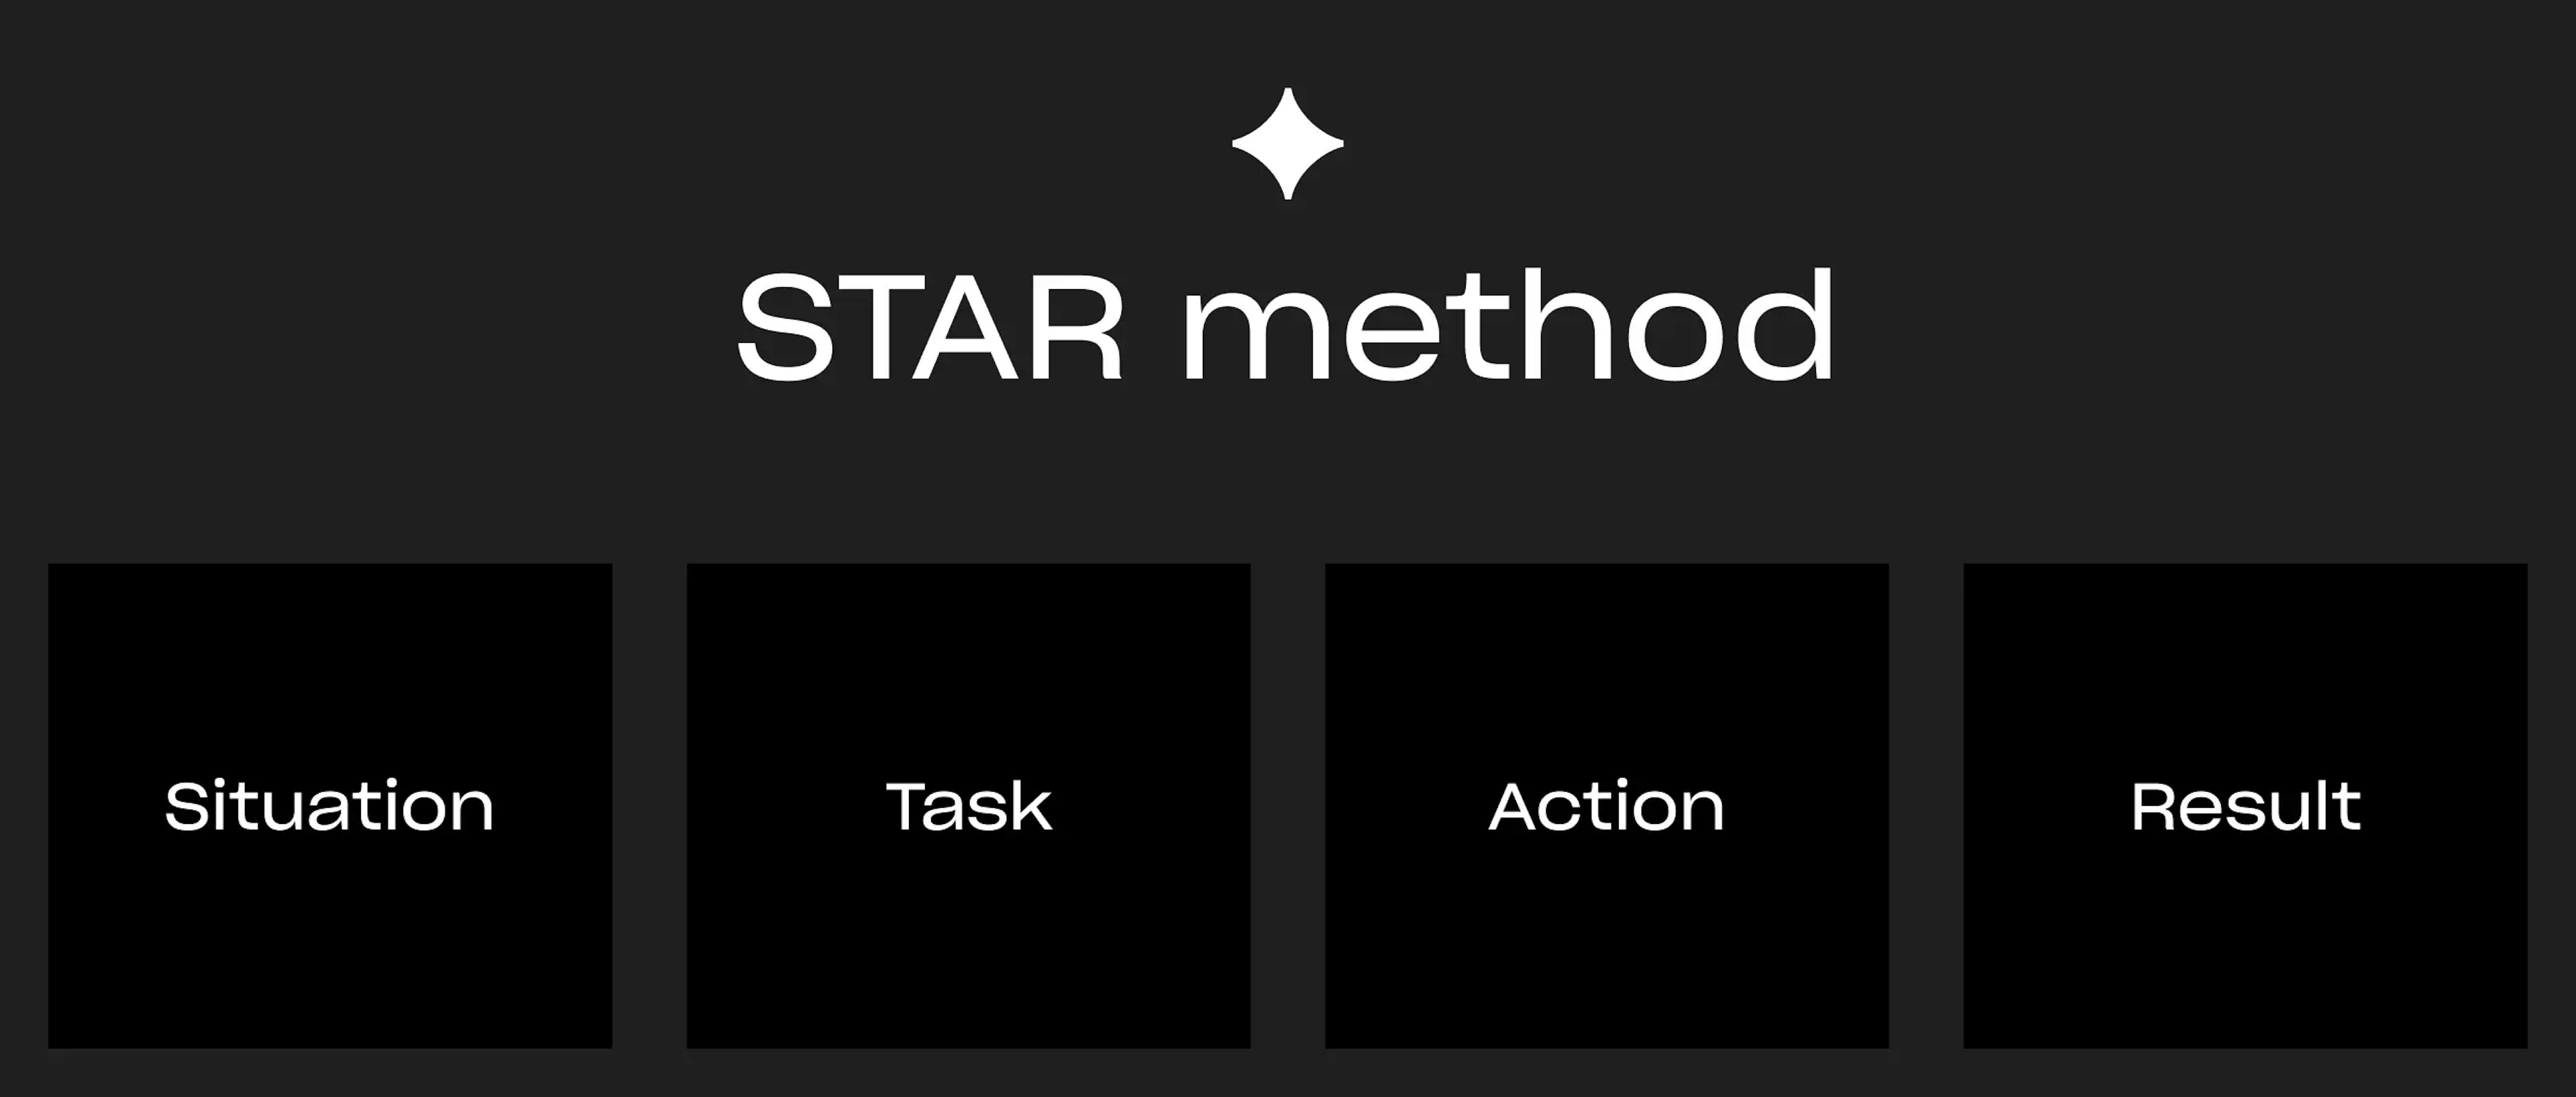 STAR method